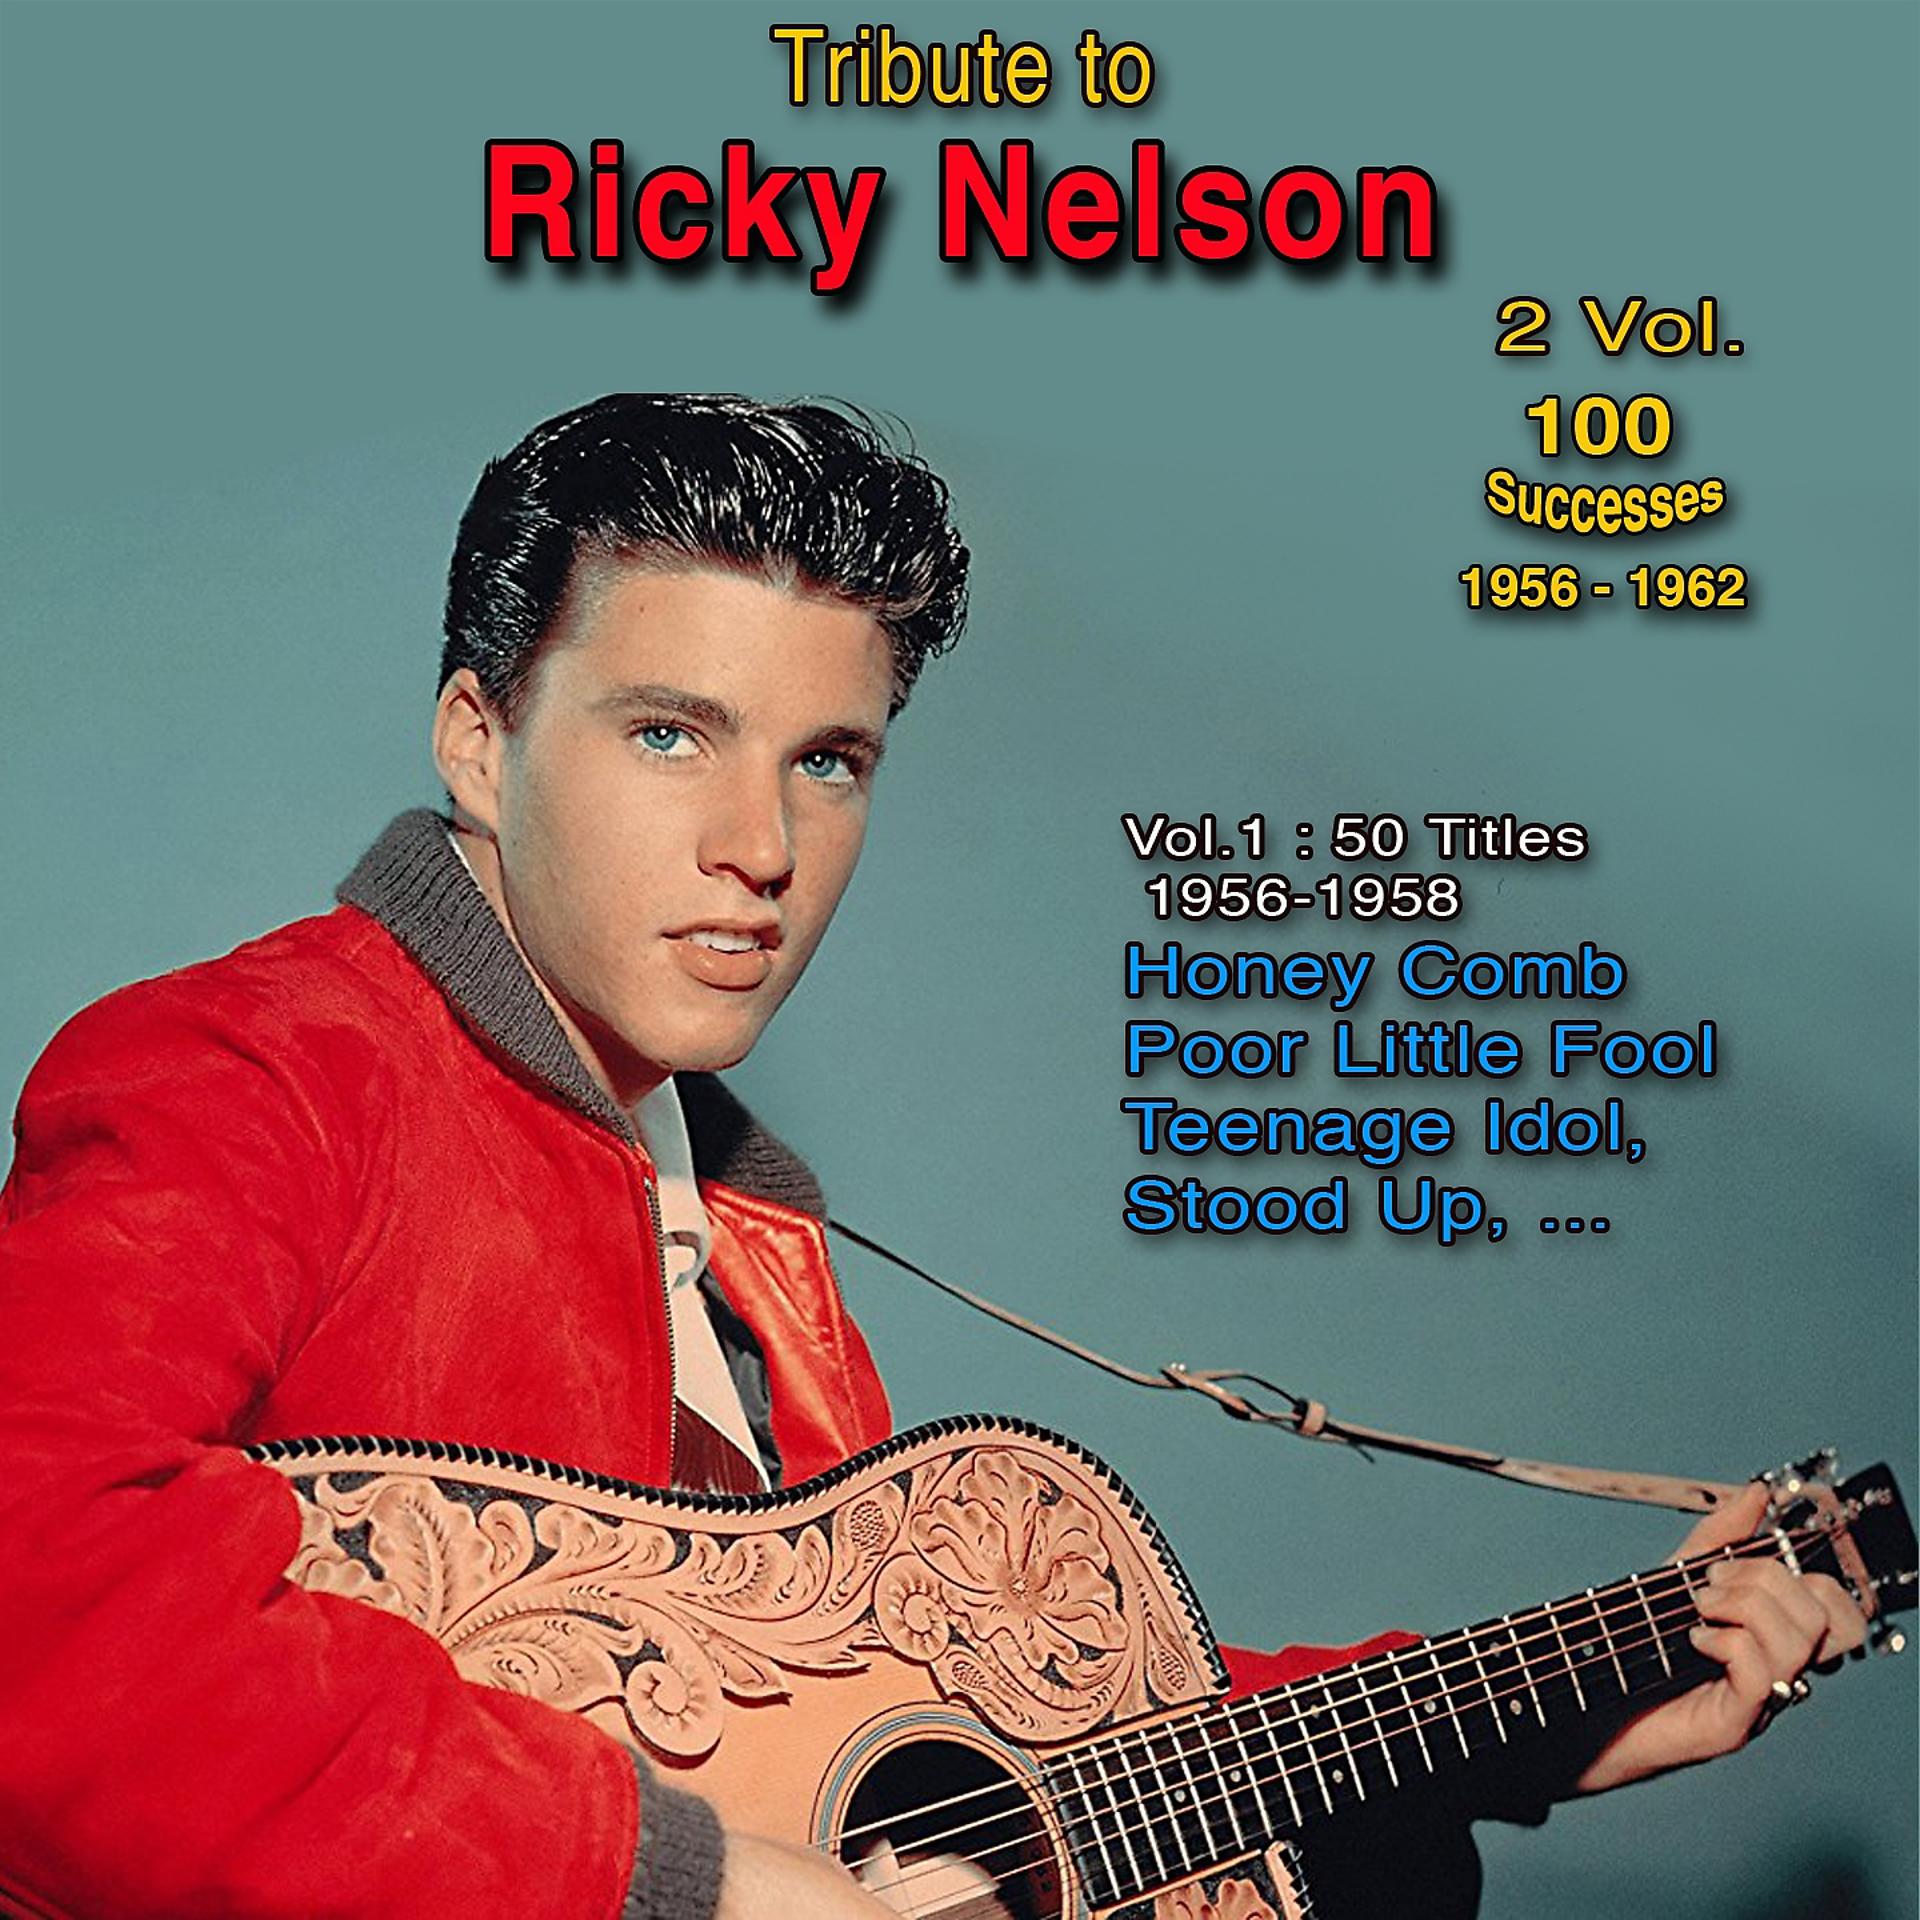 Постер альбома Ricky Nelson "Teen Idol" - Integral 1956-1962 - 100 Successes in 2 Vol.